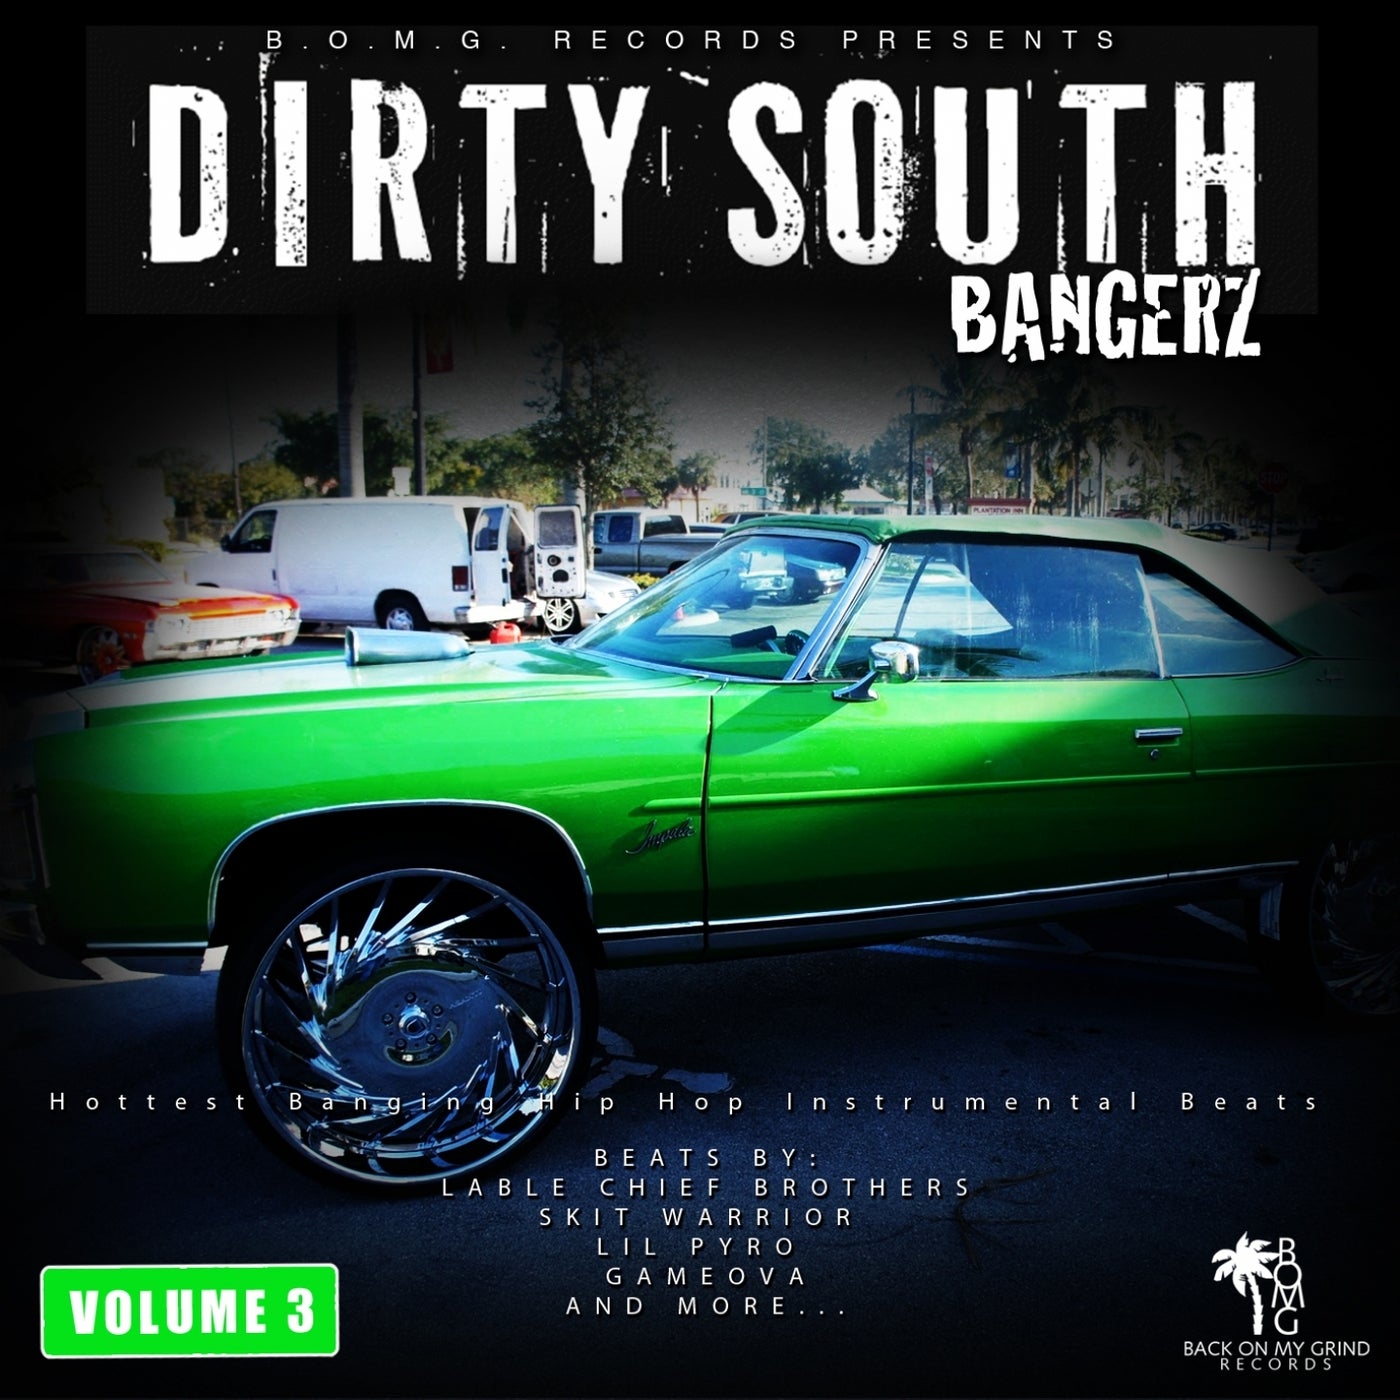 Dirty South Bangerz, Vol. 3 (Hottest Hip Hop Instrumental Beats) by Bob The Beat, Lil Pyro, Boy Greezy Beats, Gameova, DJ Speechless, Reckless Instrumentalz, DJ Whoops, Jack Lable Chief Brothers,